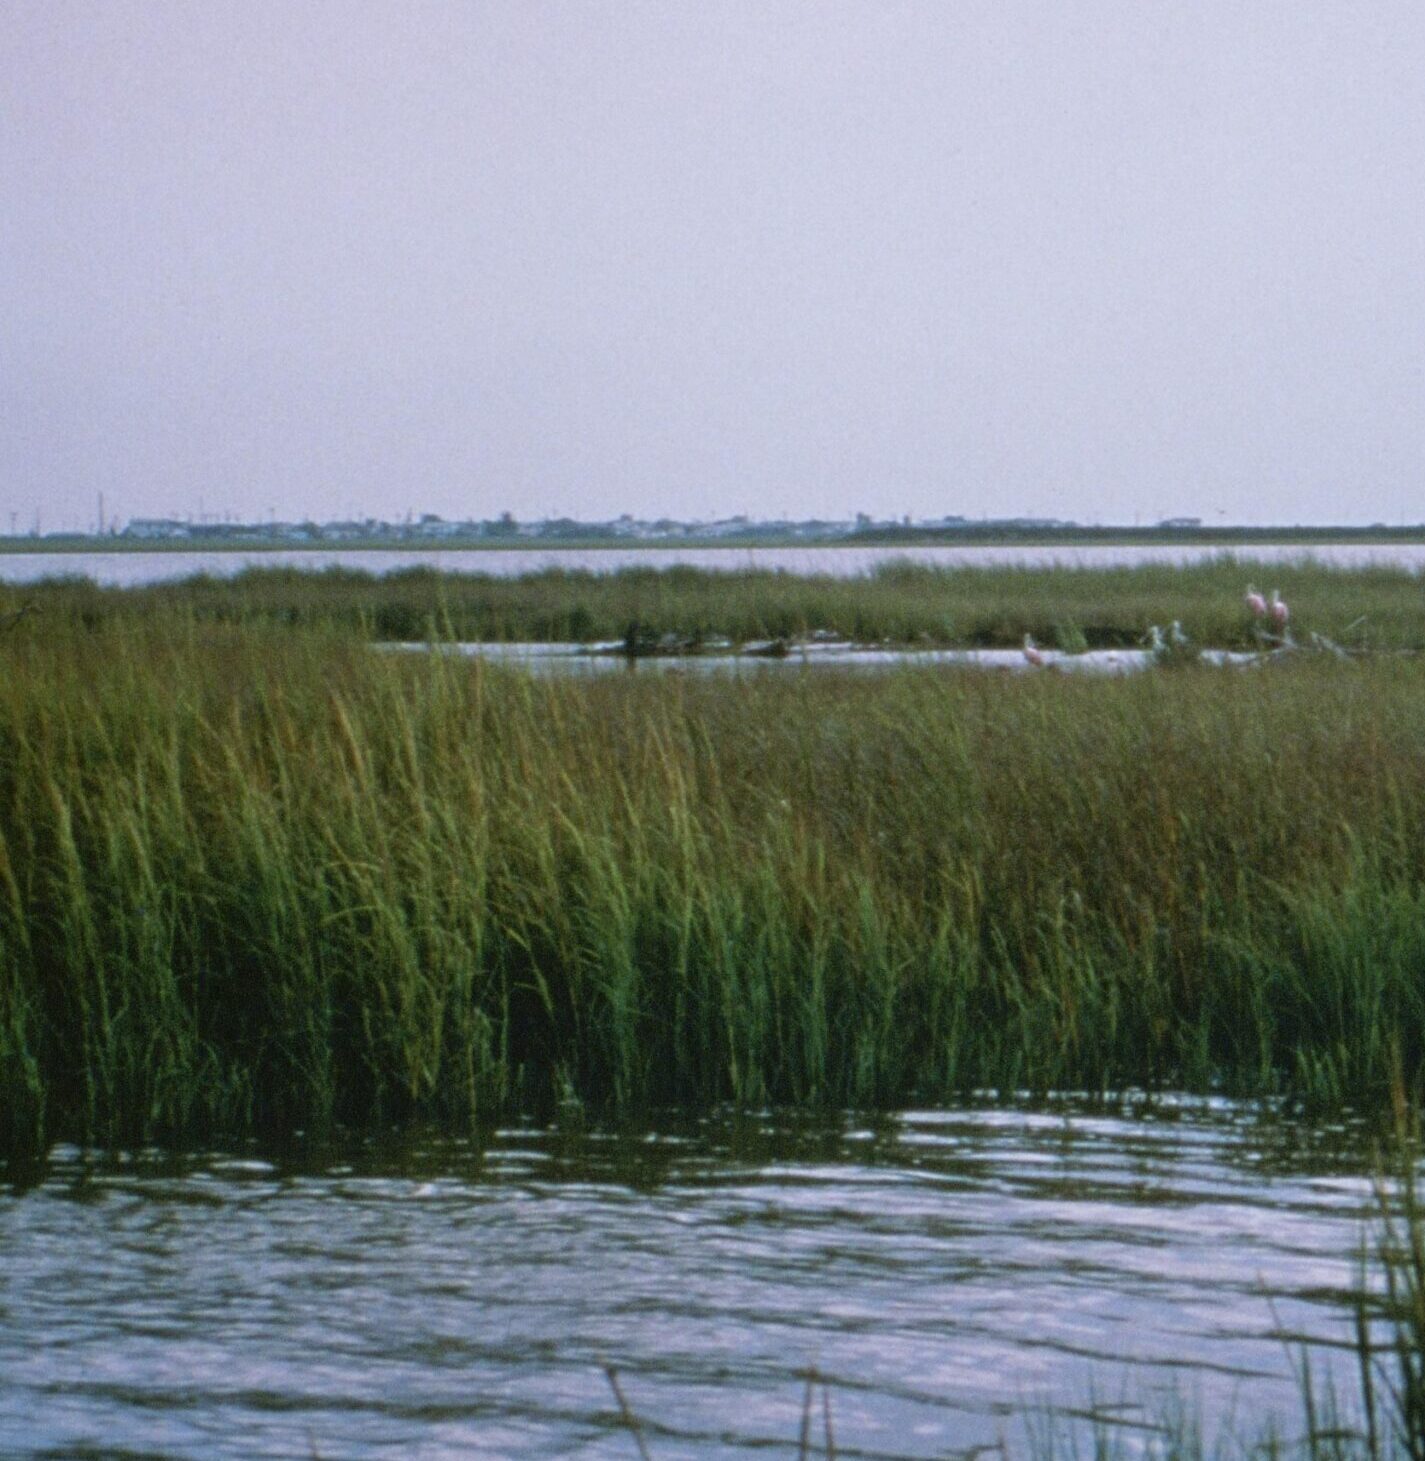 A scene of coastal wetlands